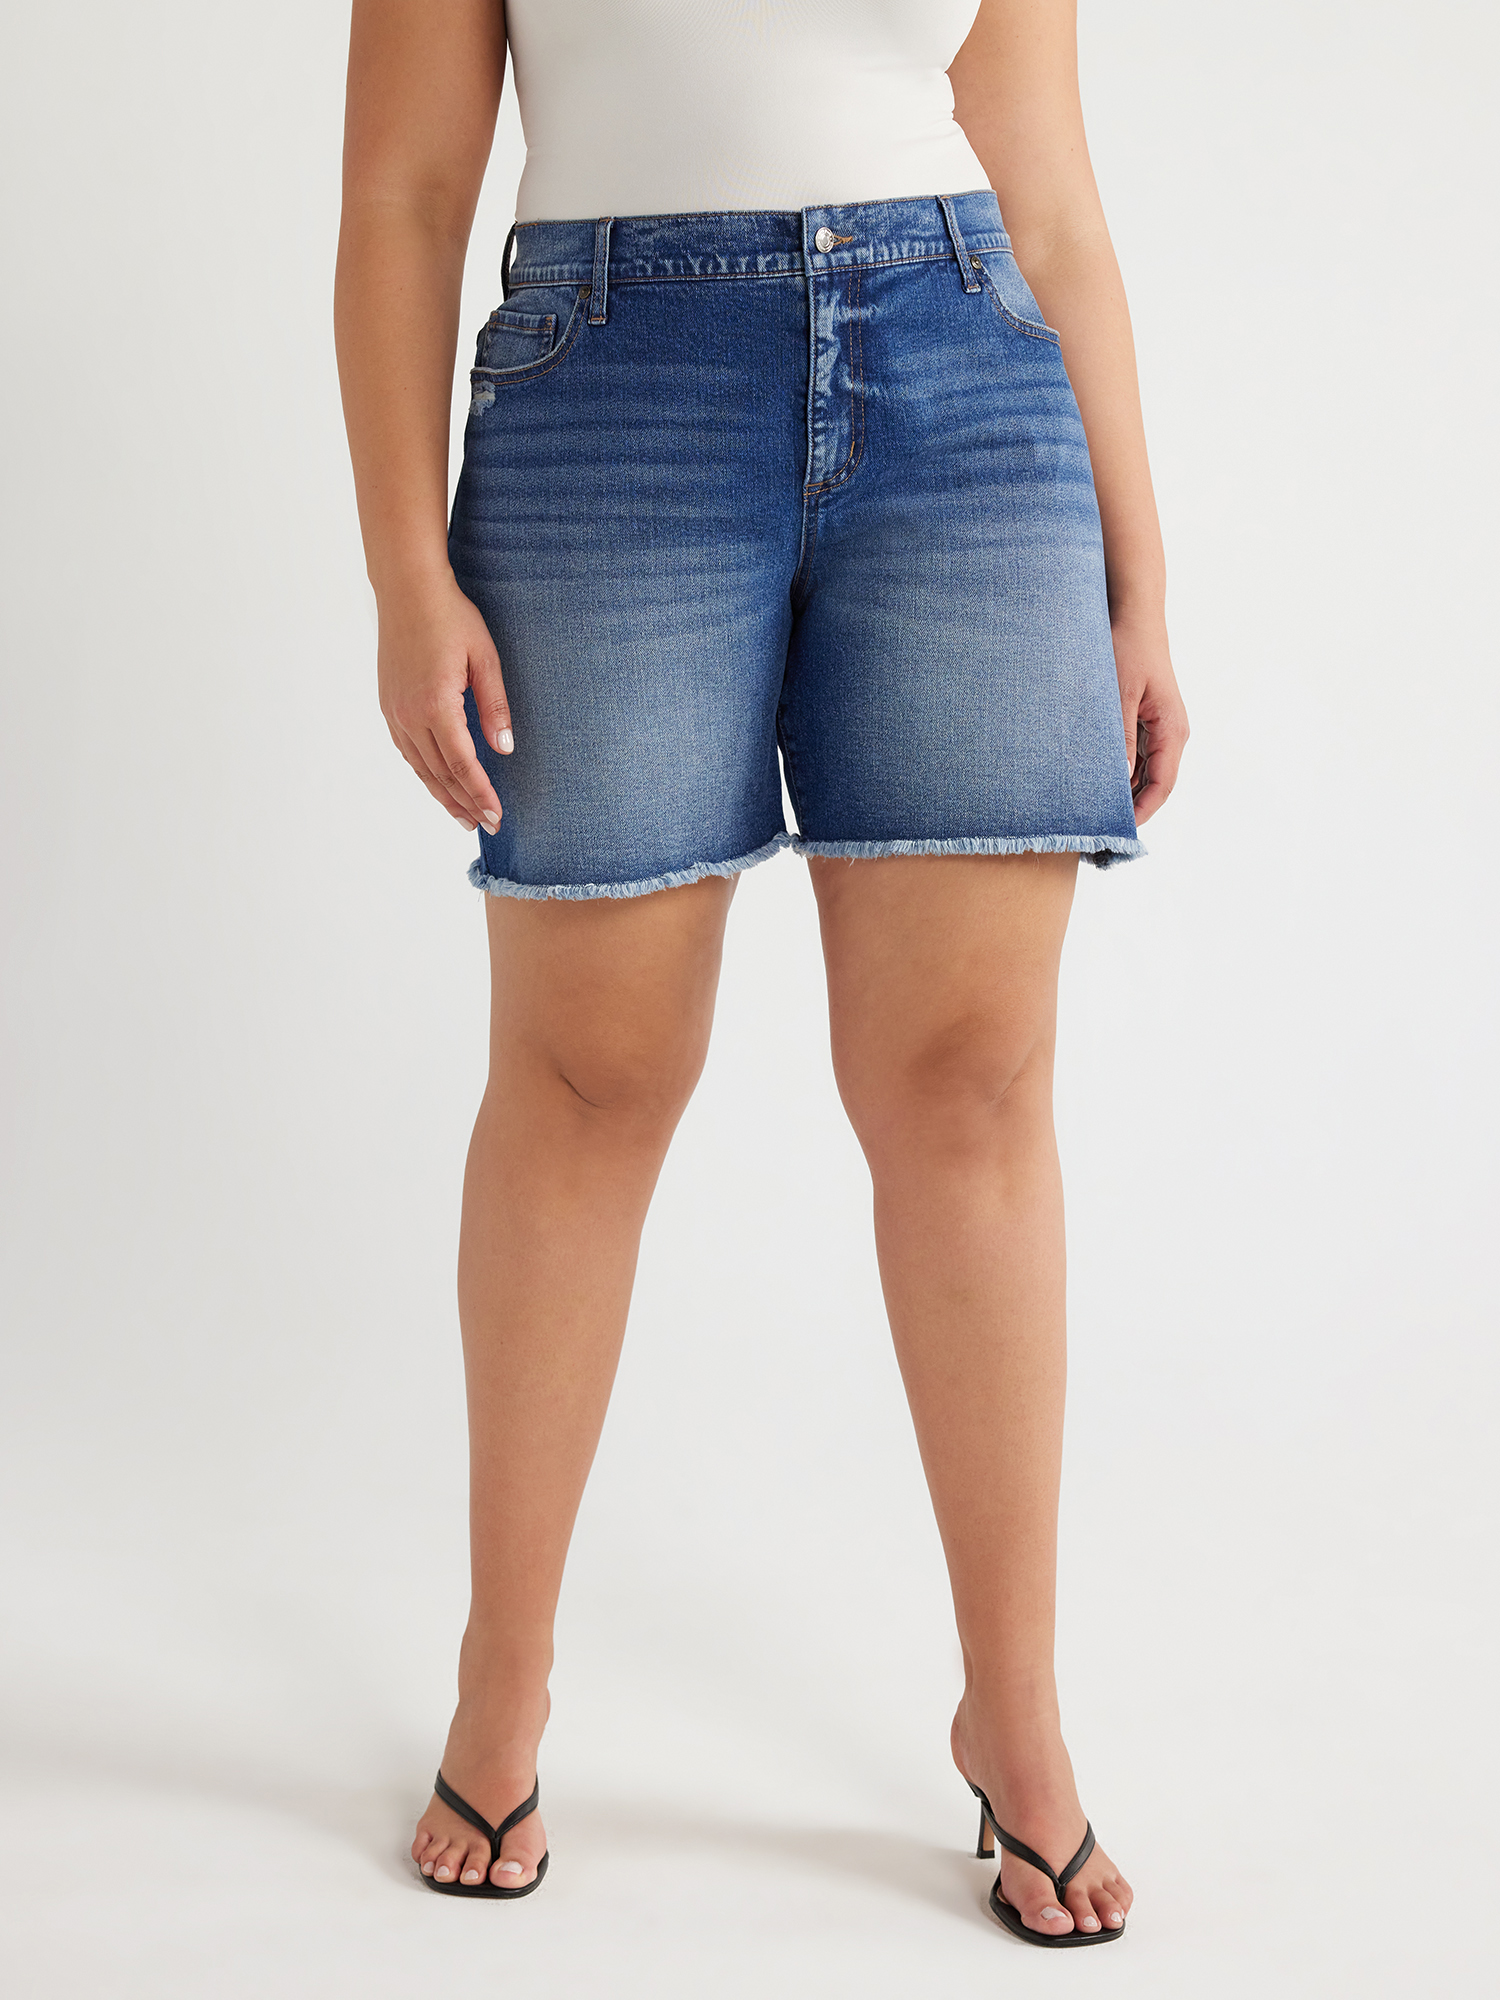 Sofia Jeans Women's Plus Size Gabriella Mid Rise Frayed Hem Bermuda Shorts, 7" Inseam, Sizes 14W-28W